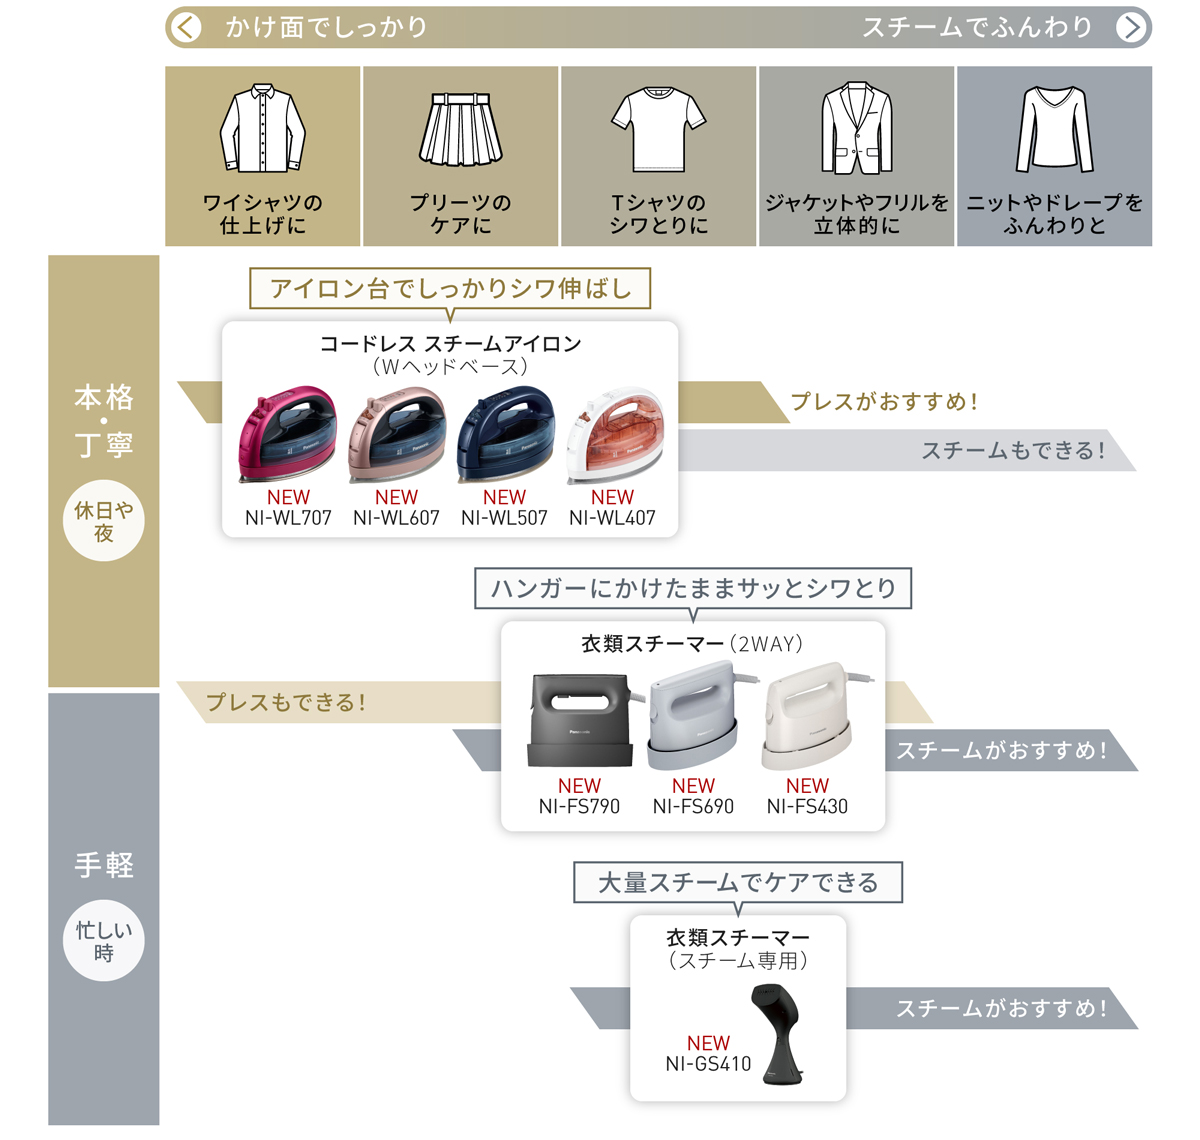 lineup selectchart 2 1200 - 衣類スチーマー【鬼比較】NI-FS790とNI-FS780 違い口コミ レビュー!